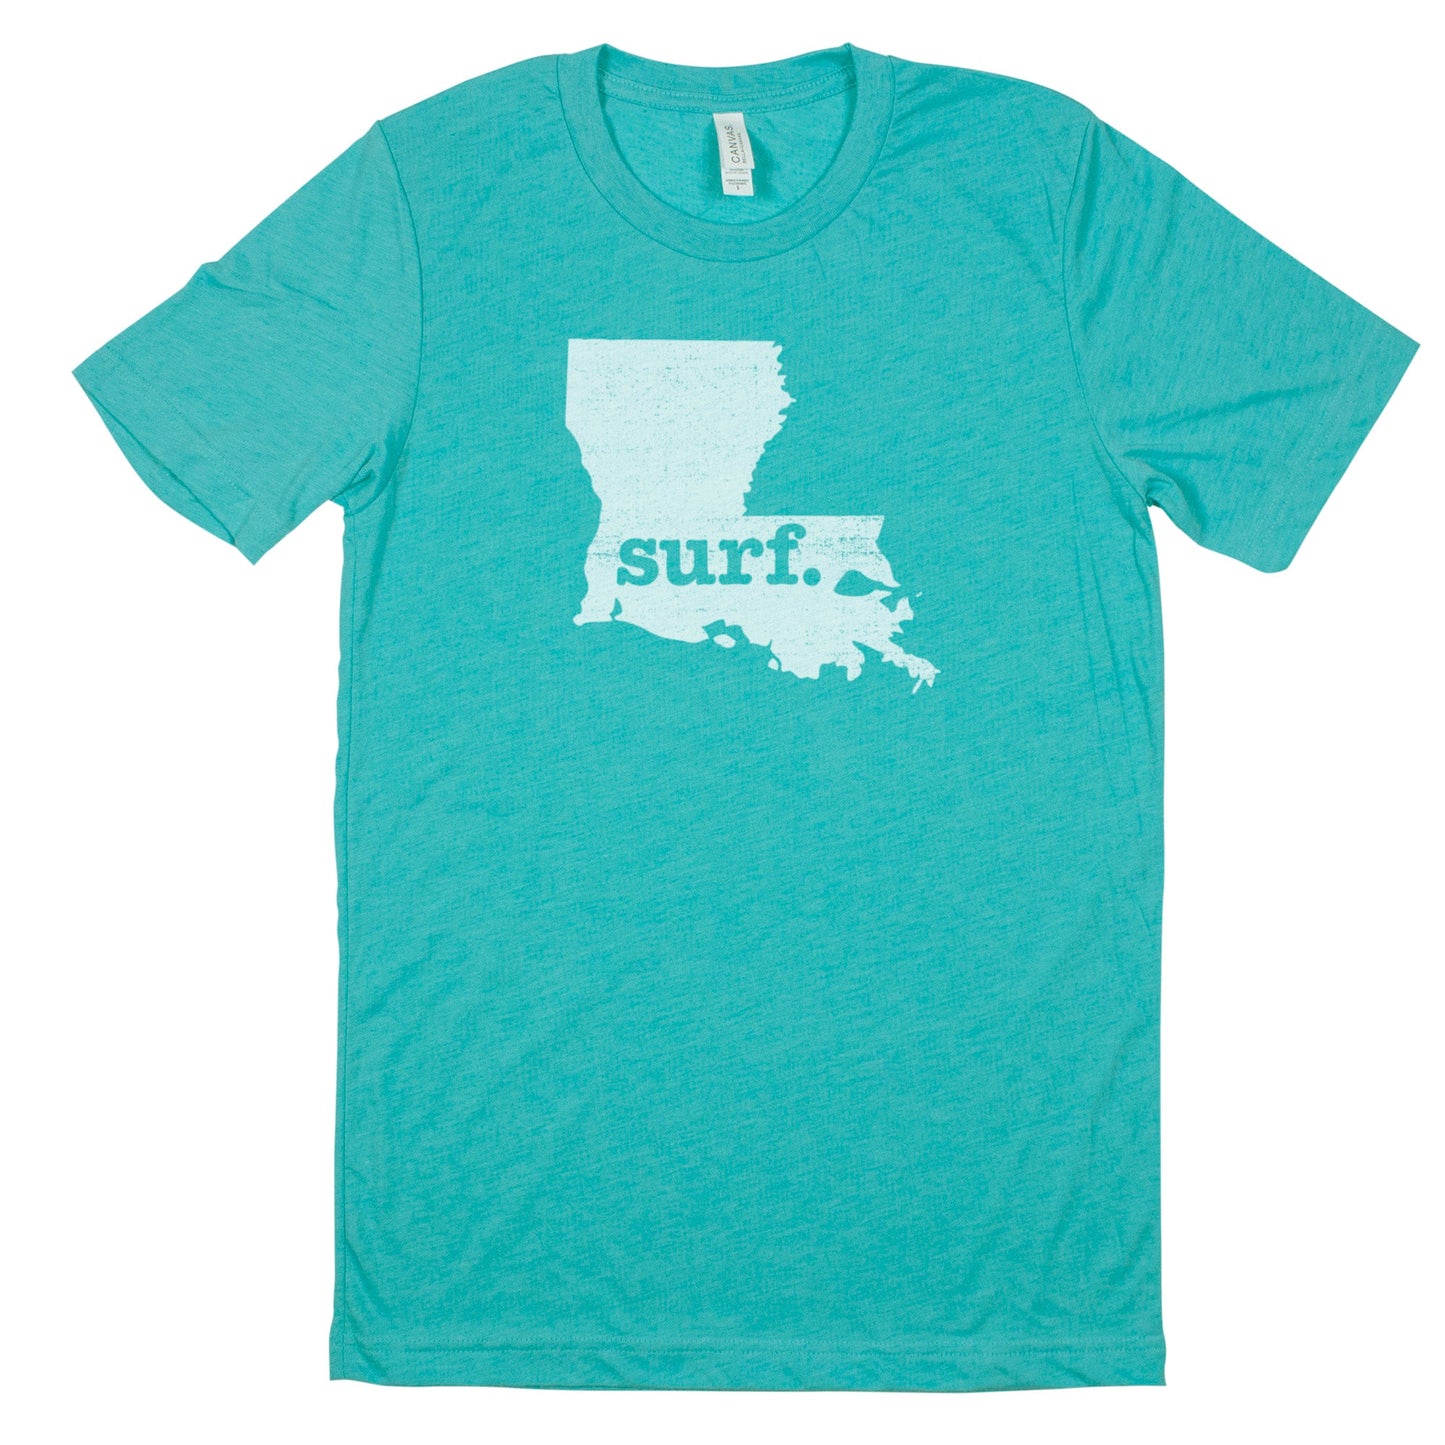 surf. Men's Unisex T-Shirt - Louisiana